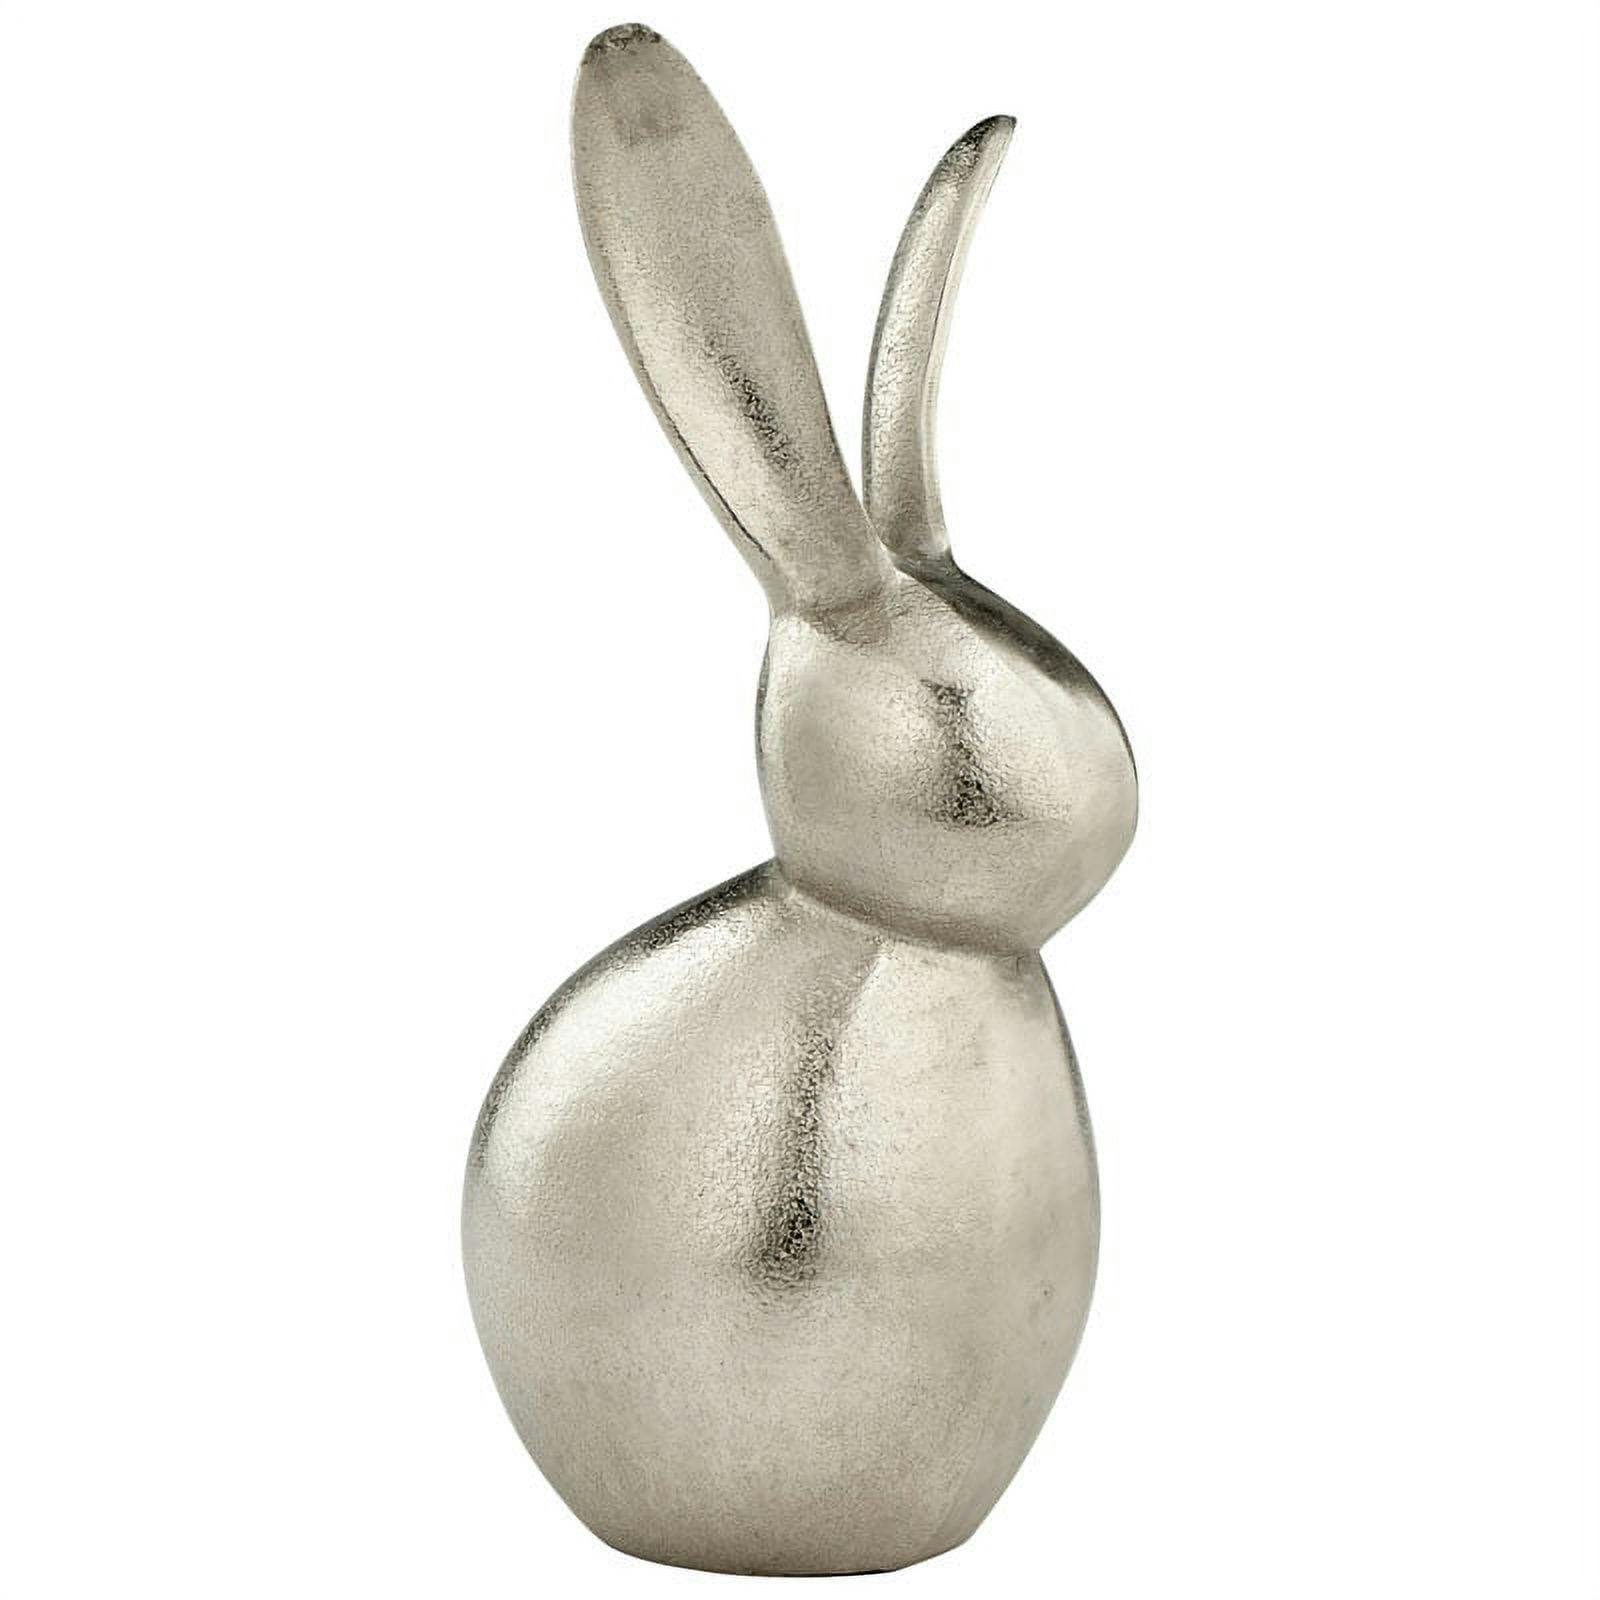 Sleek Silver Metal Rabbit Sculpture 6"W x 13.25"H